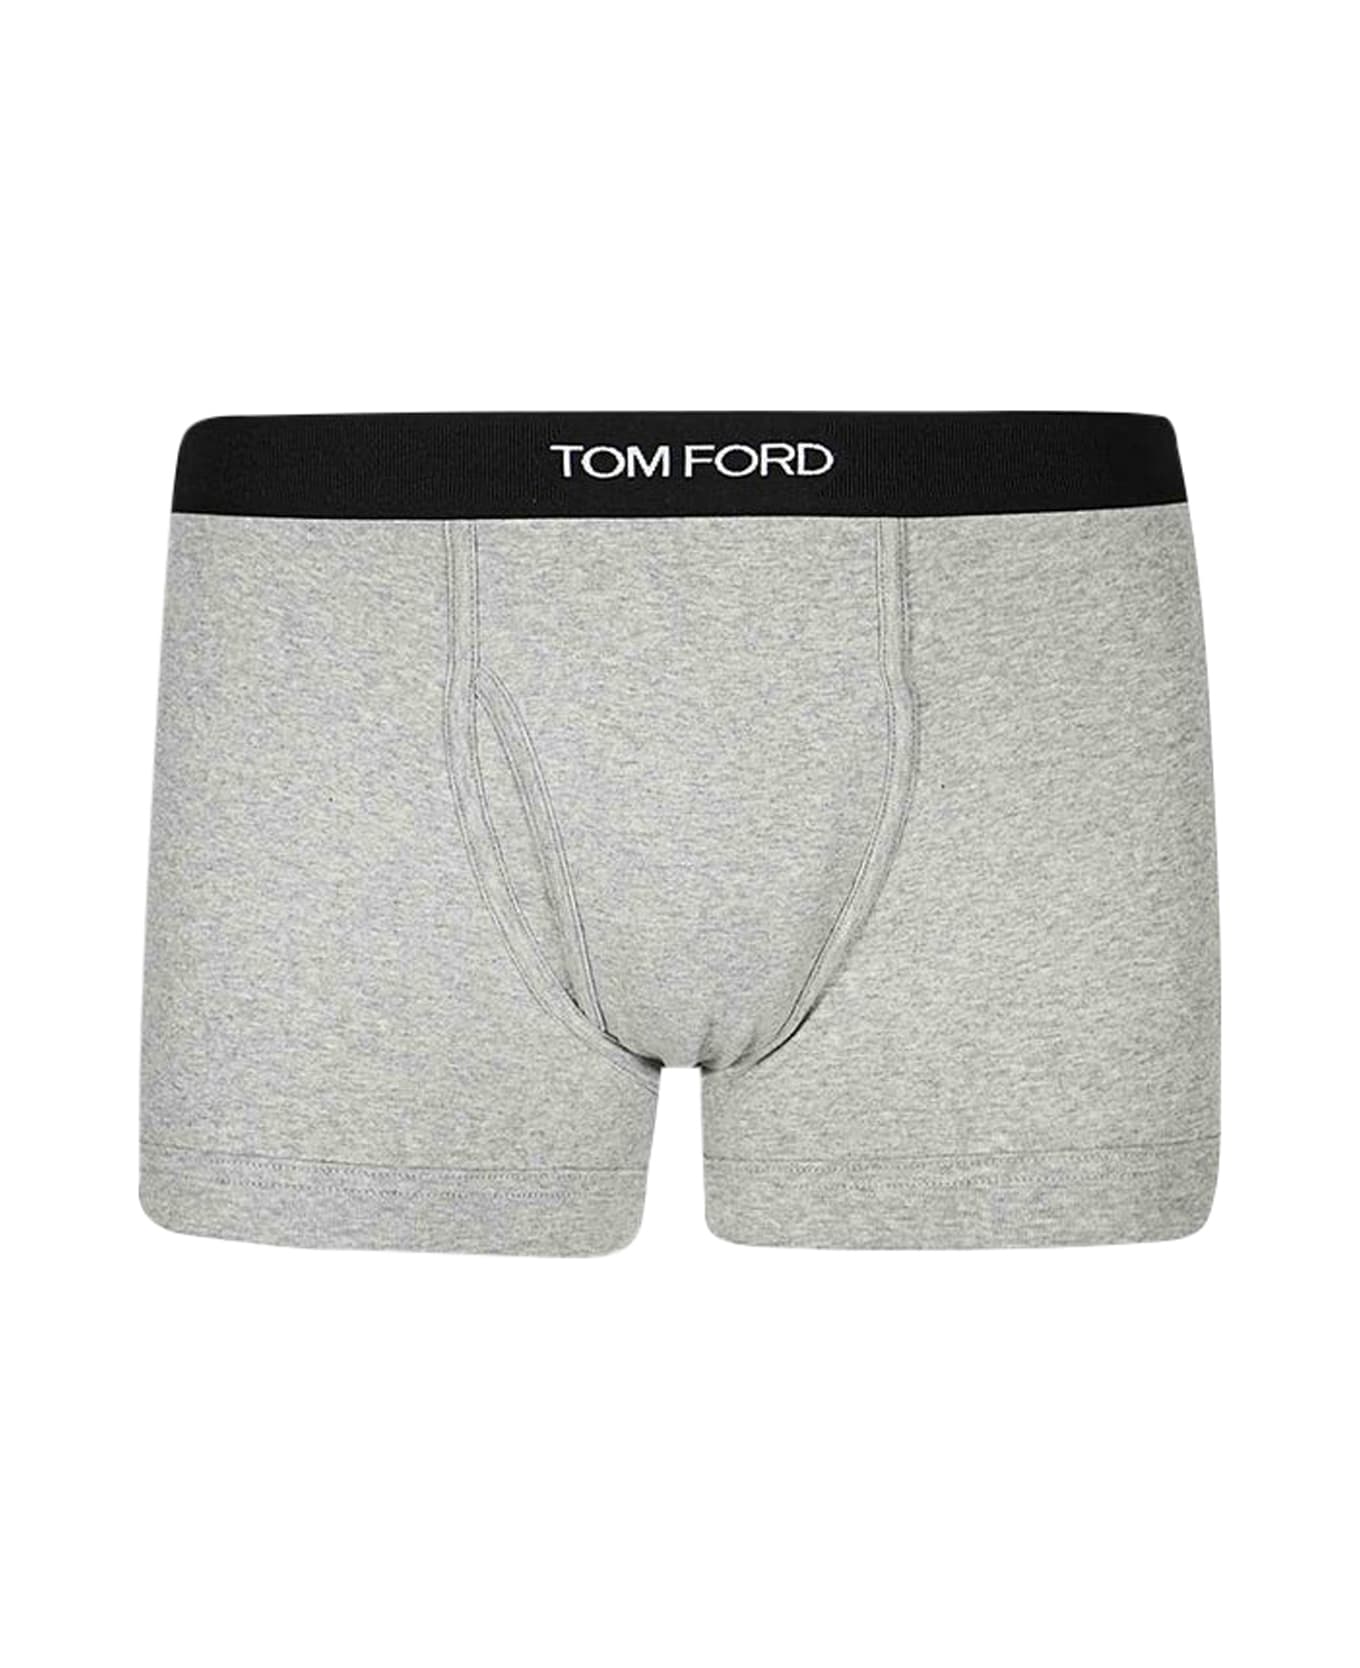 Tom Ford Bi-pack Boxer Brief - Black Grey ショーツ